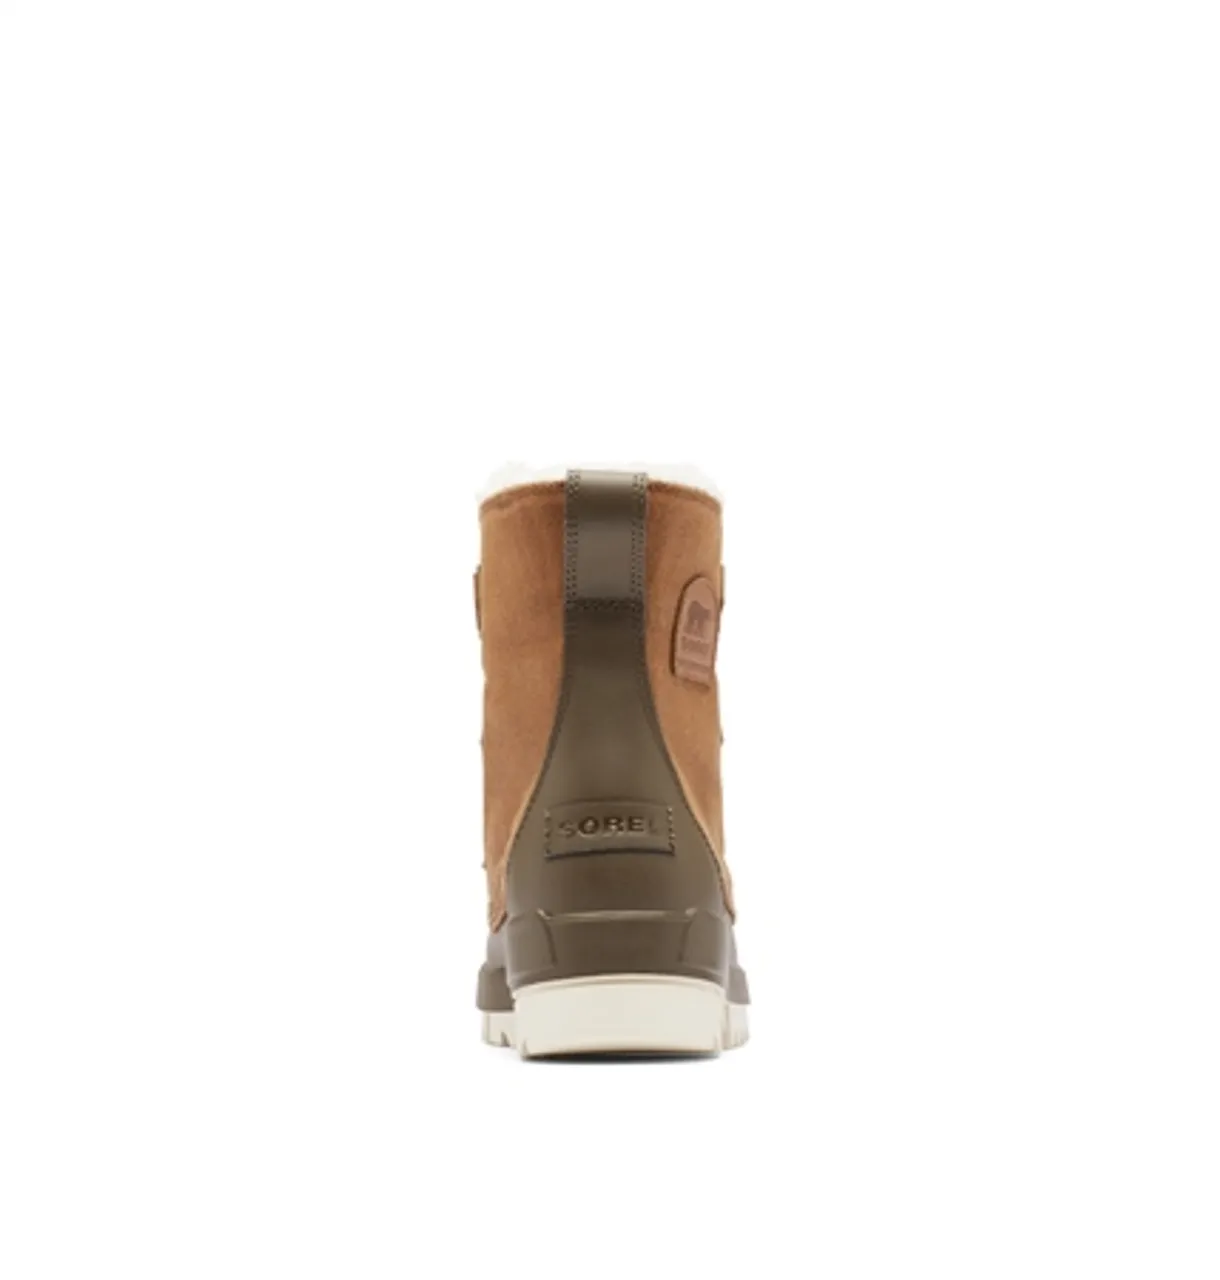 Sorel Torino II Waxcan Boots - Velvet Tan & Olive Green - UK 4 (EU 37)